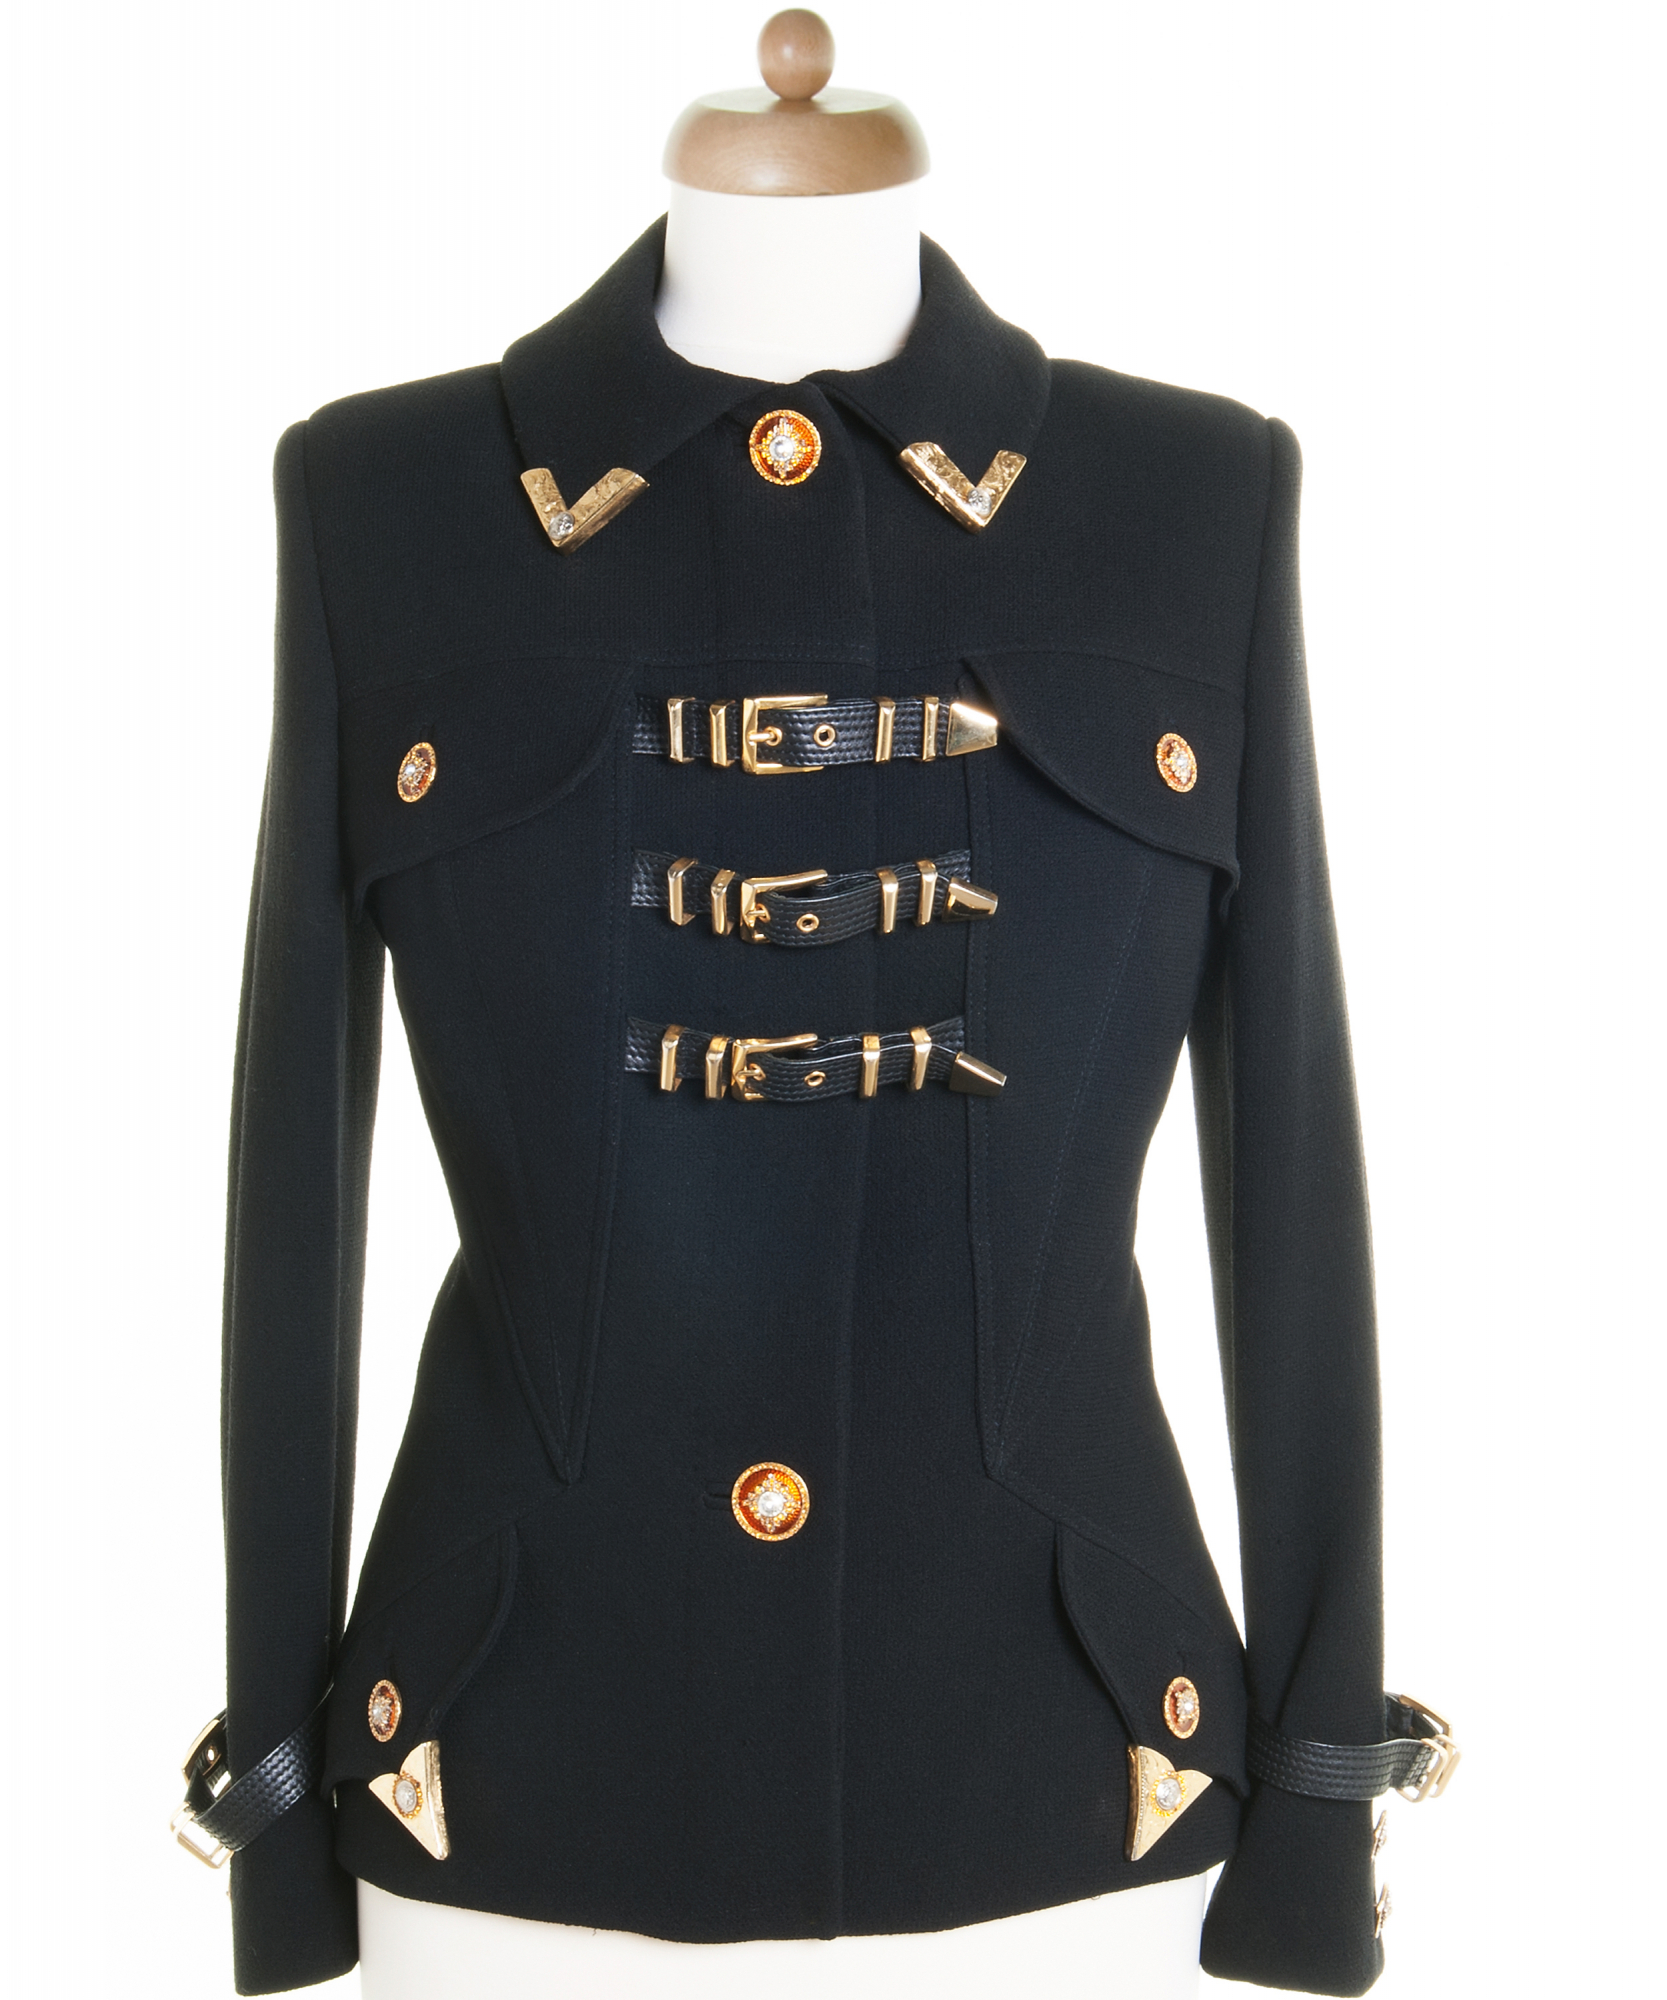 AW 1992 Versace Runway Jacket, Bondage Collection - Gianni Versace